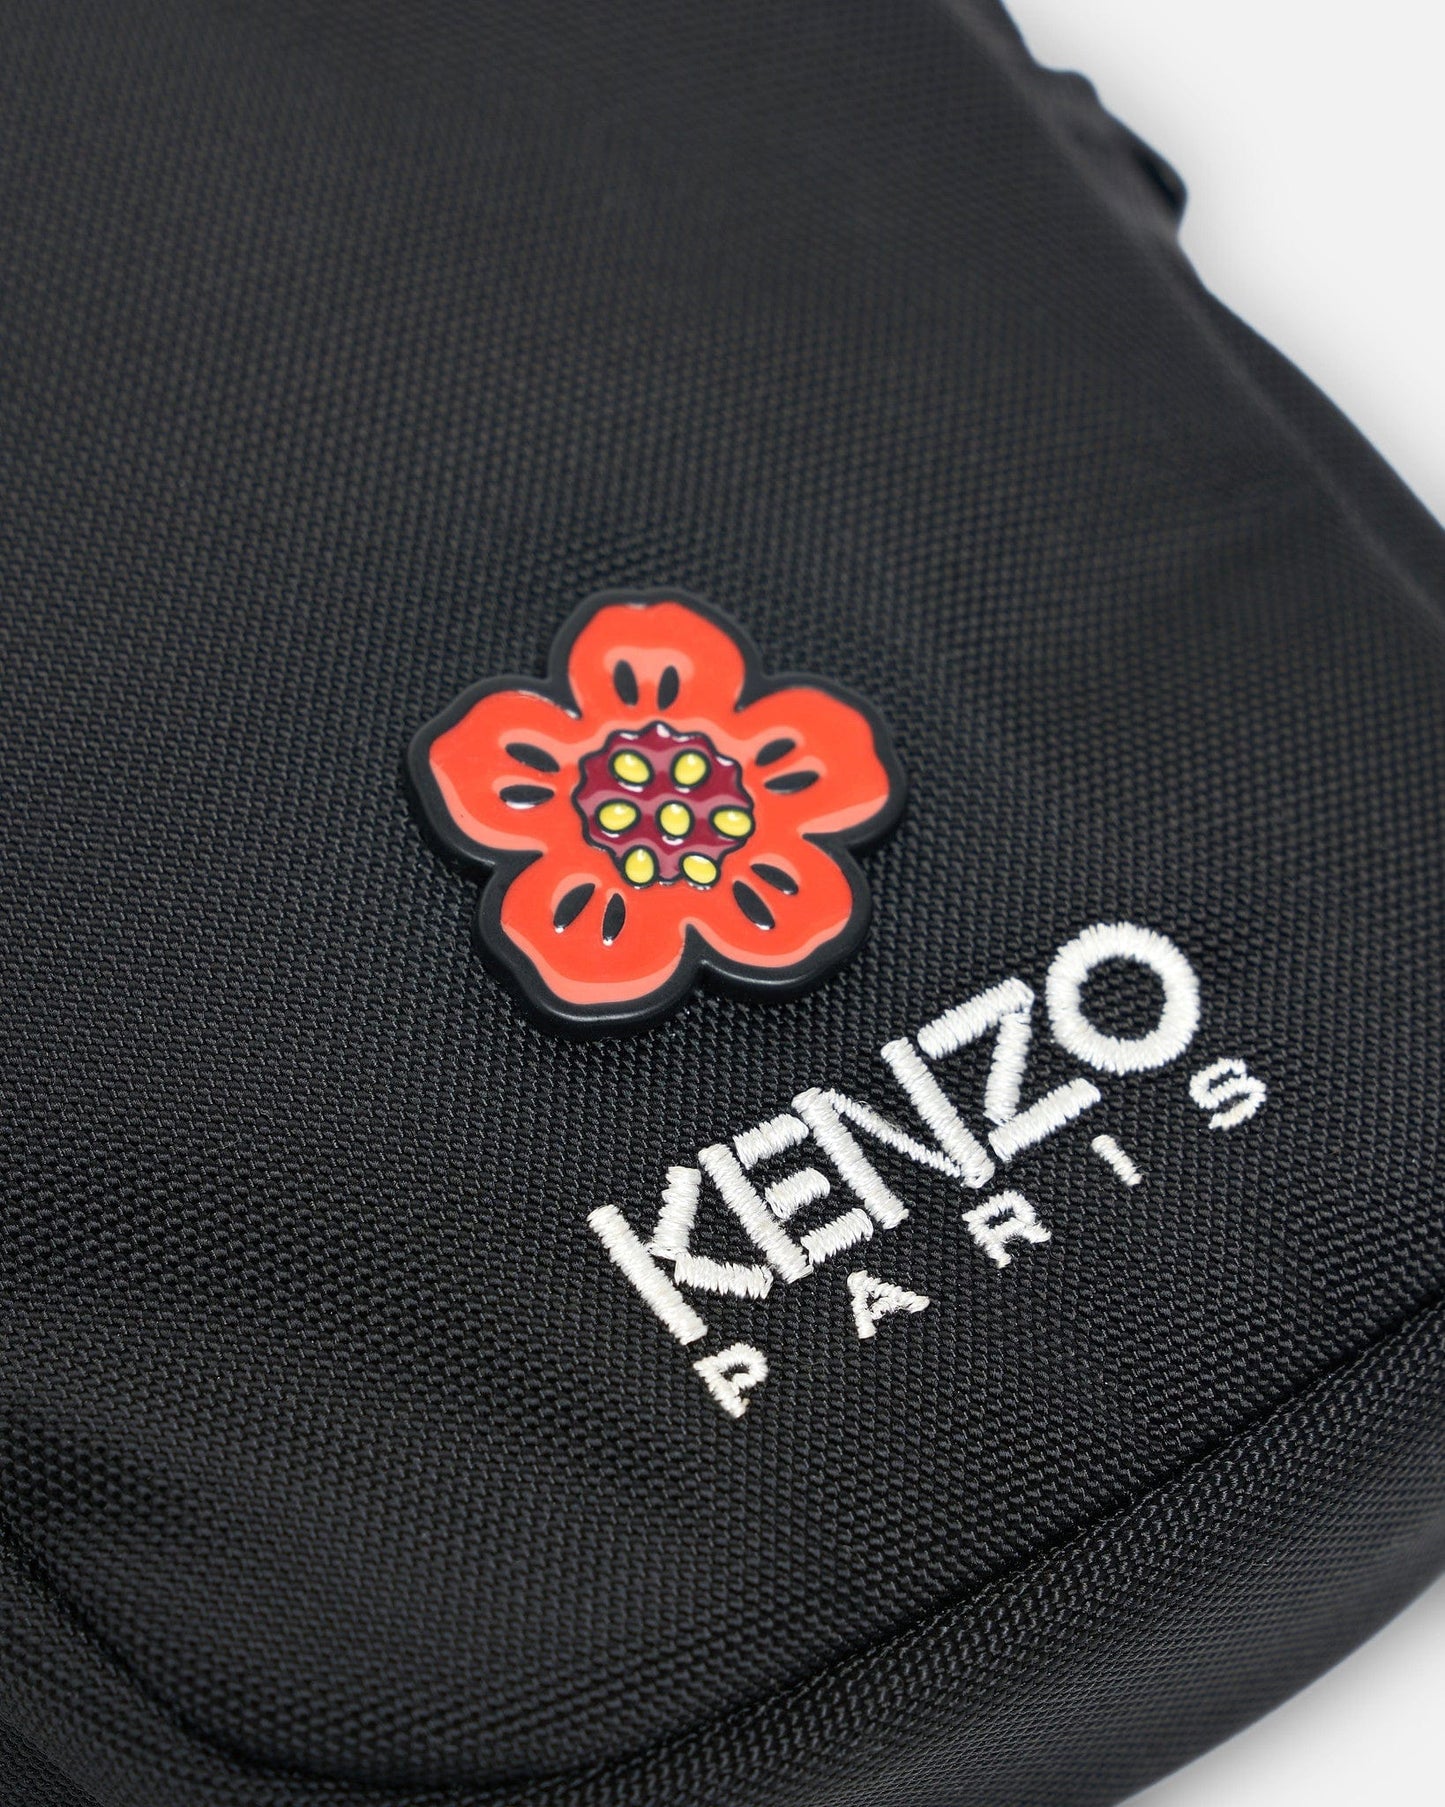 KENZO Leather Goods Phone Holder in Black